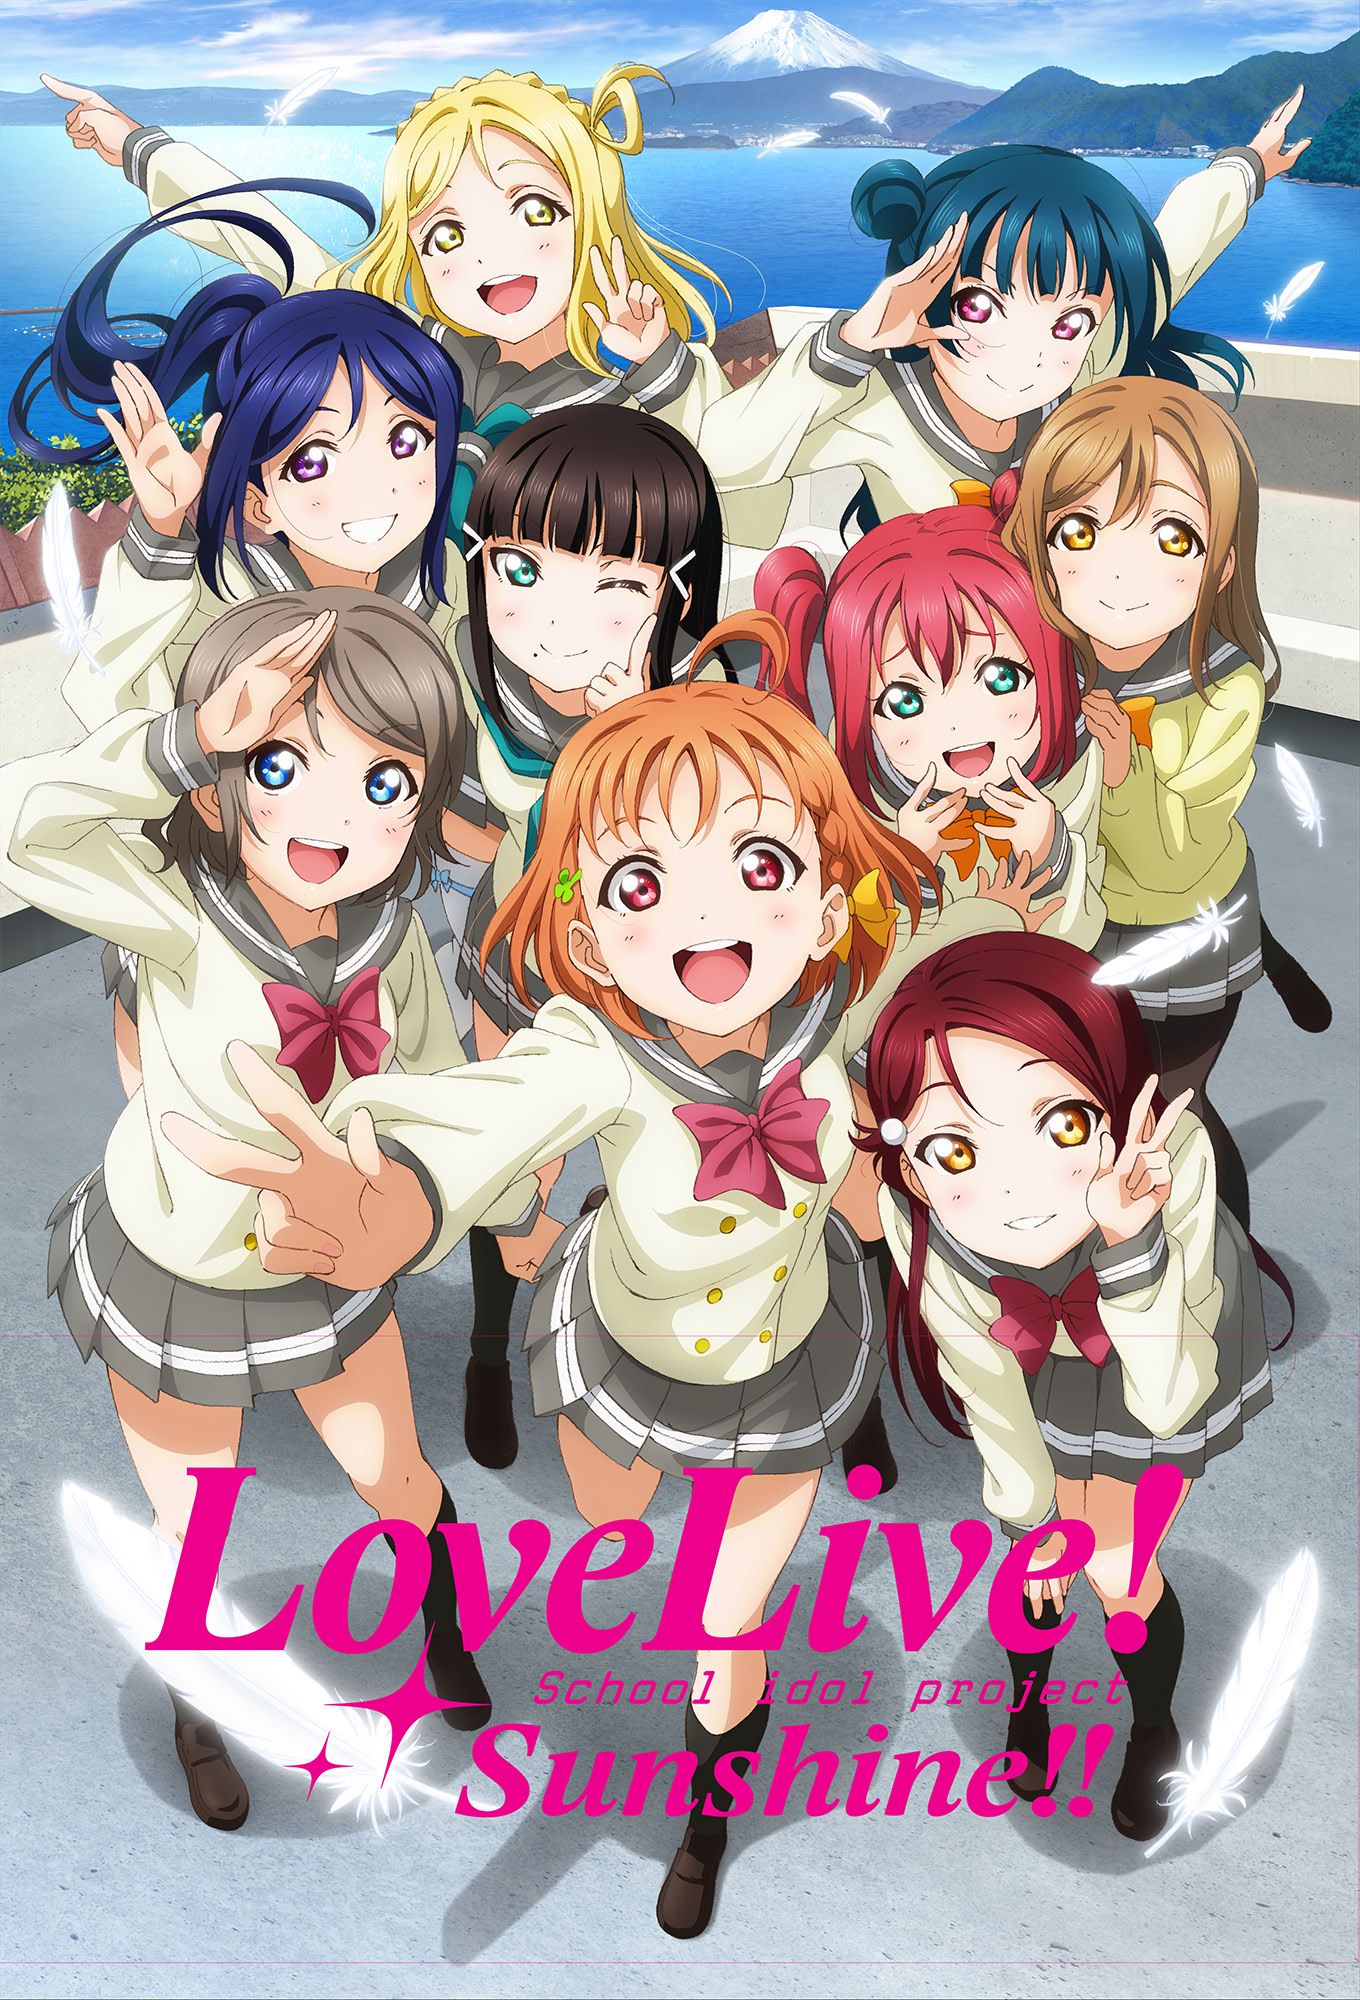 anime-love-live-sunshine-episode-13-sunshine-25-septembre